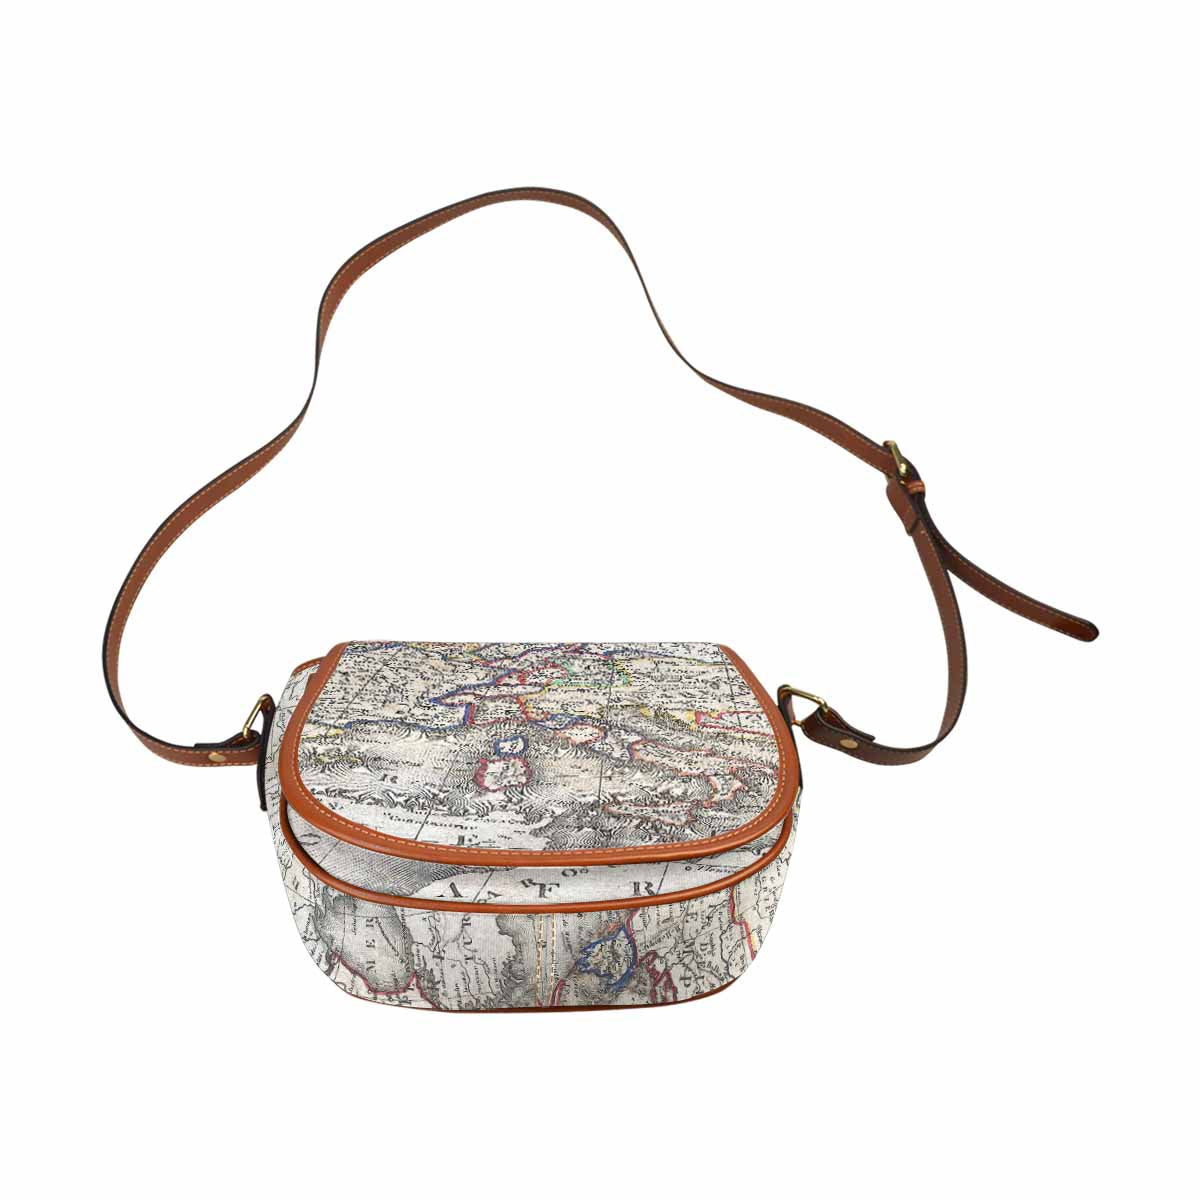 Antique Map design Handbag, saddle bag, Design 36